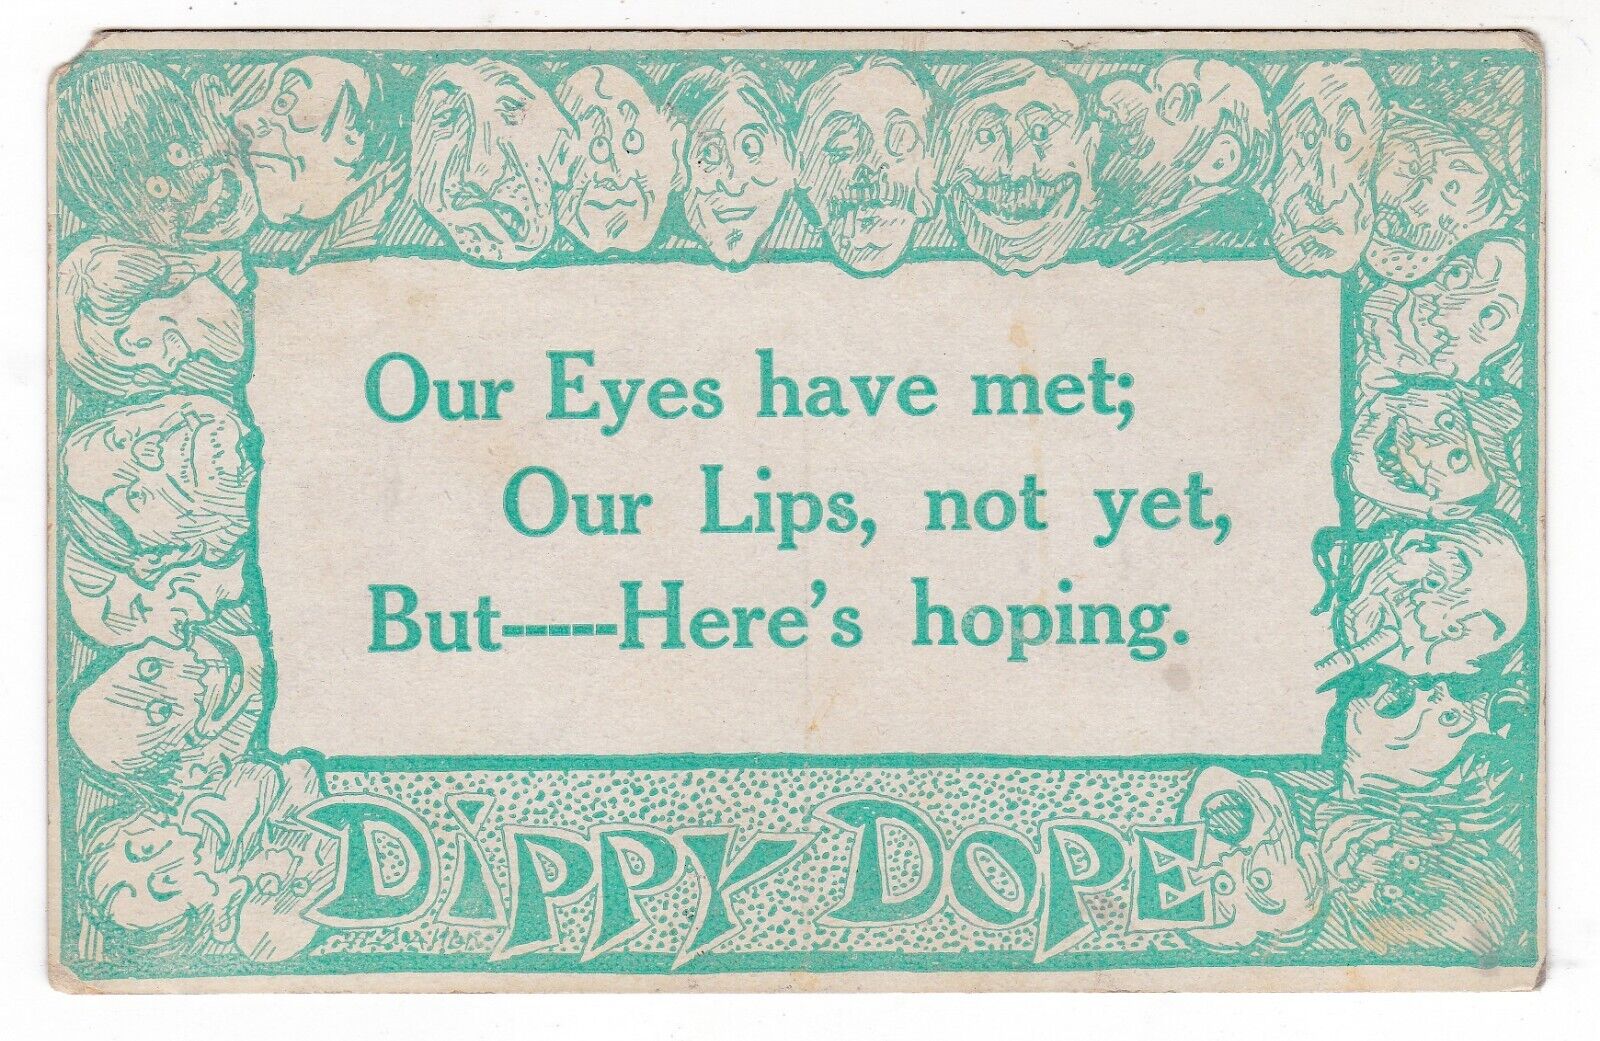 1910 SHUBERT NEBRASKA DIPPY DOPE COMIC EYES LIPS NOT YET VINTAGE POSTCARD NE OLD